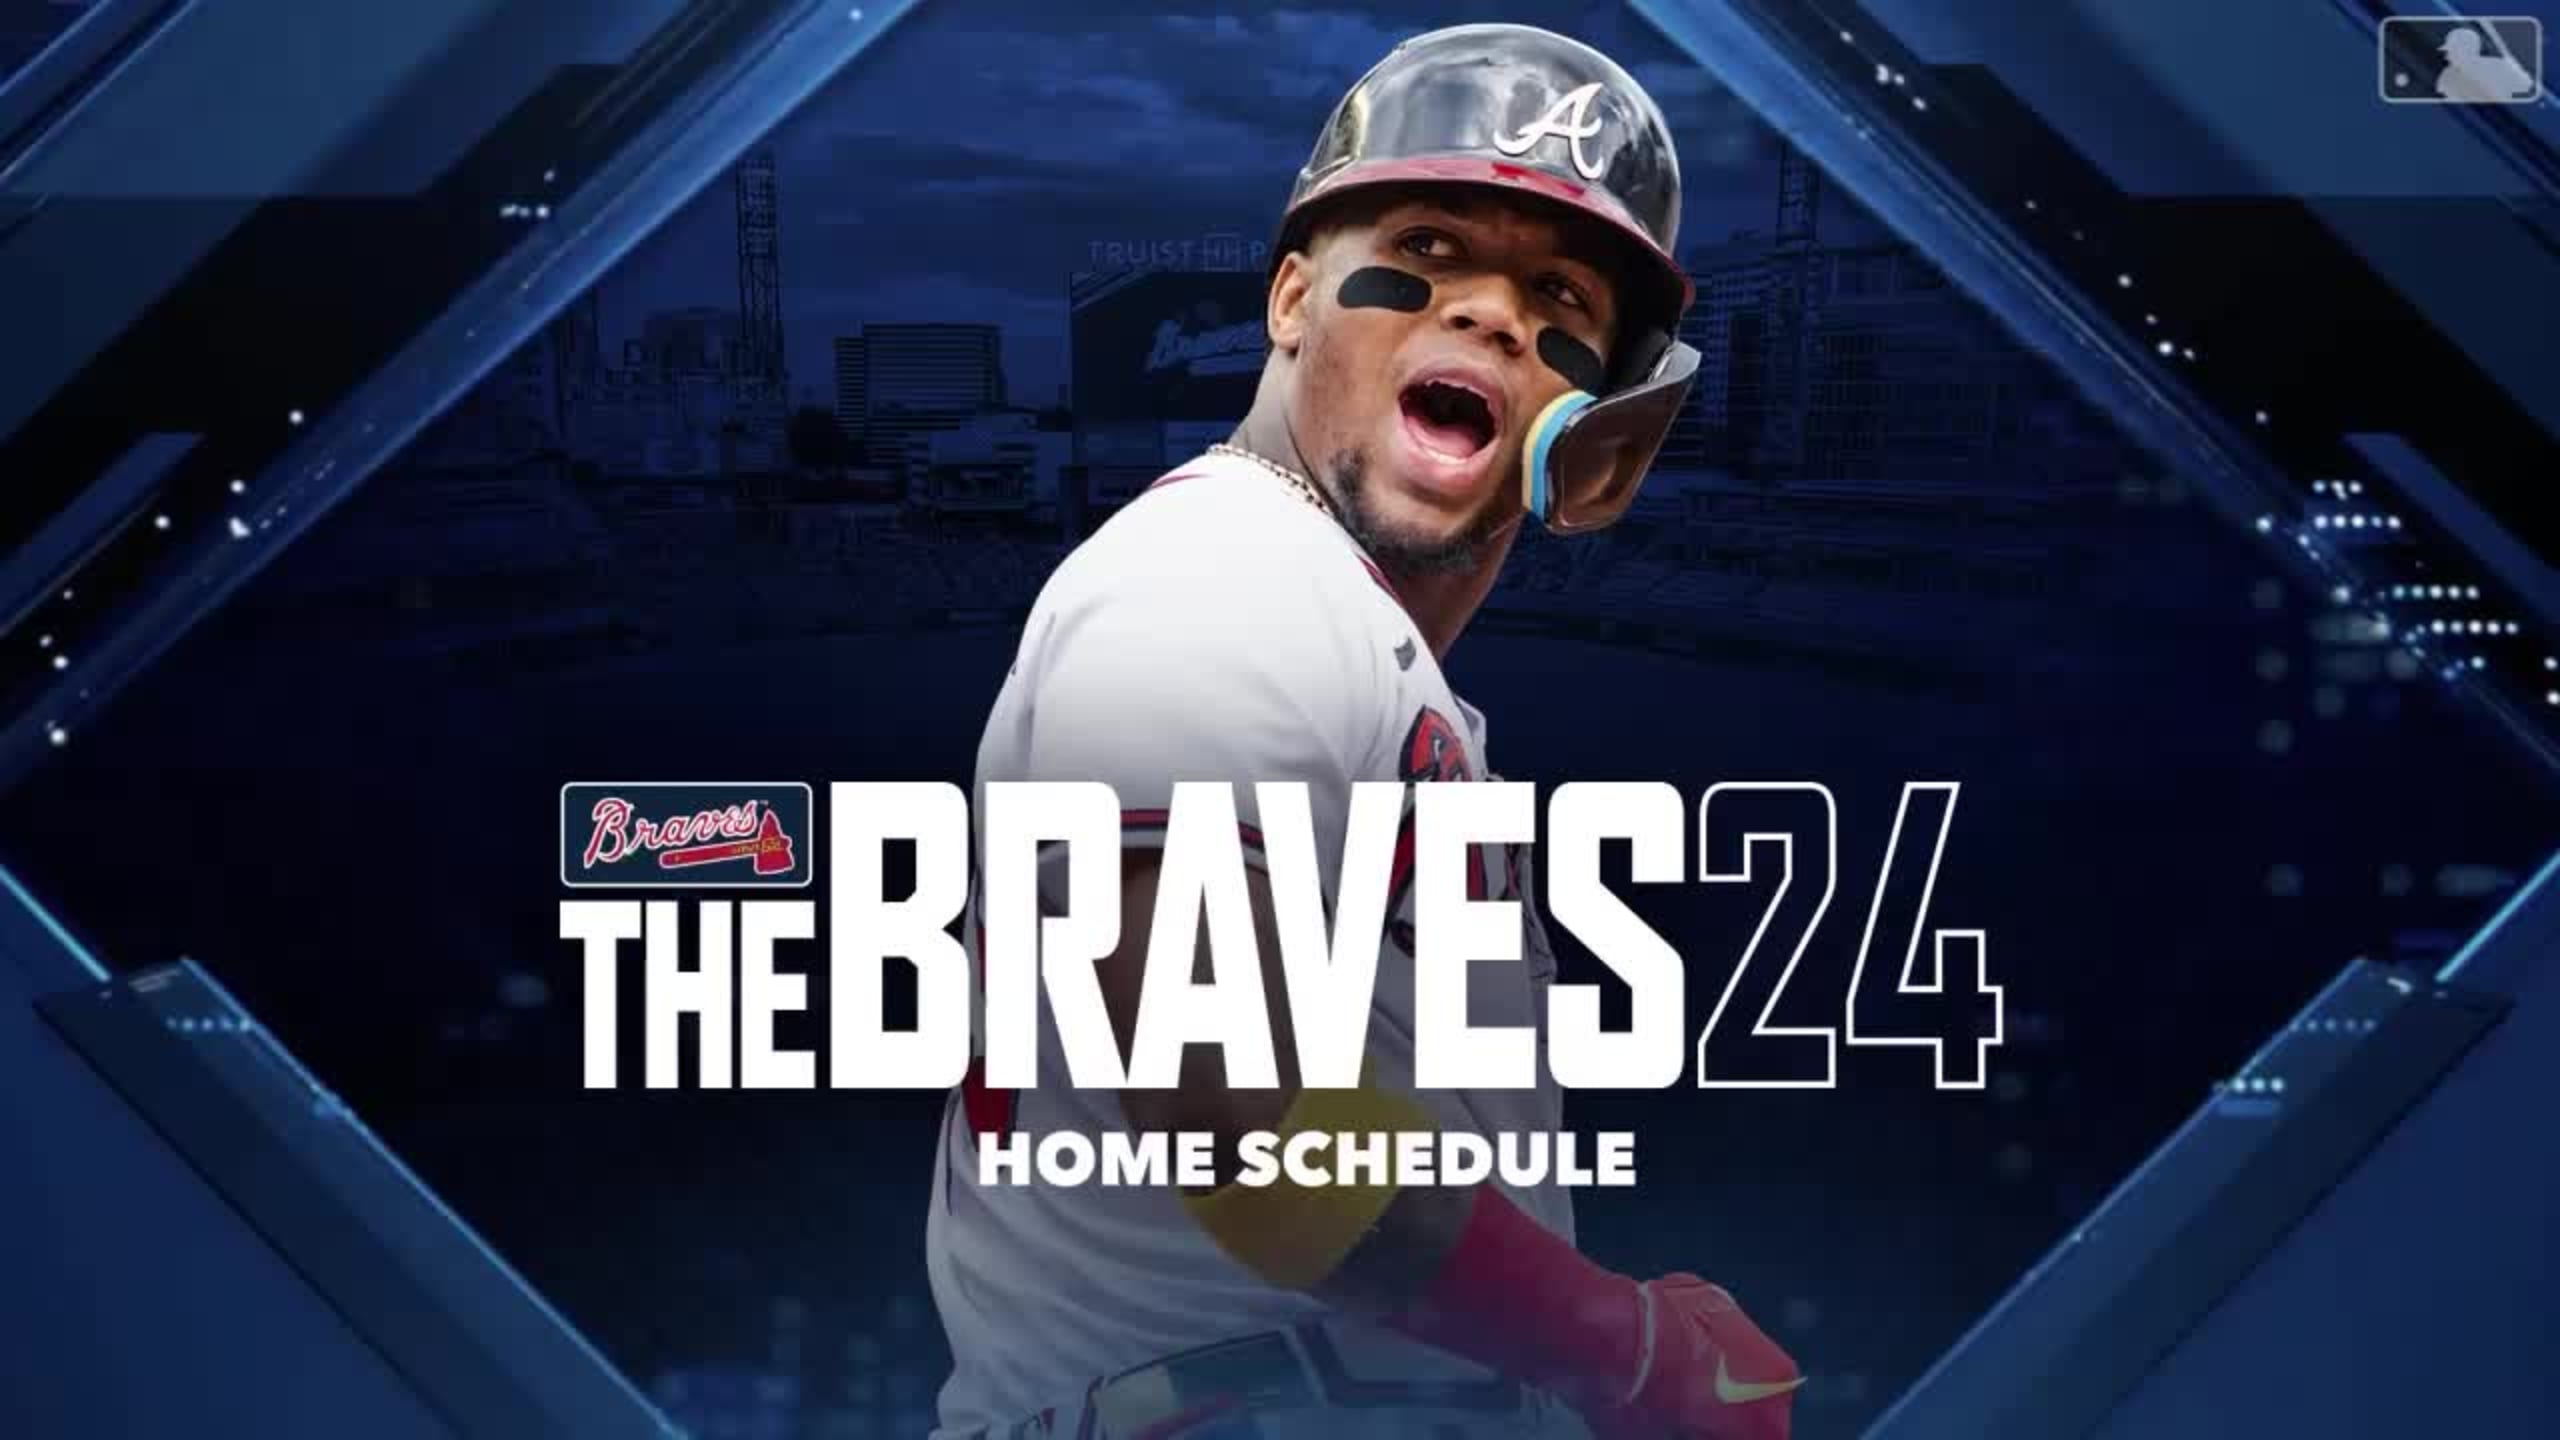 2024 Atlanta Braves Schedule